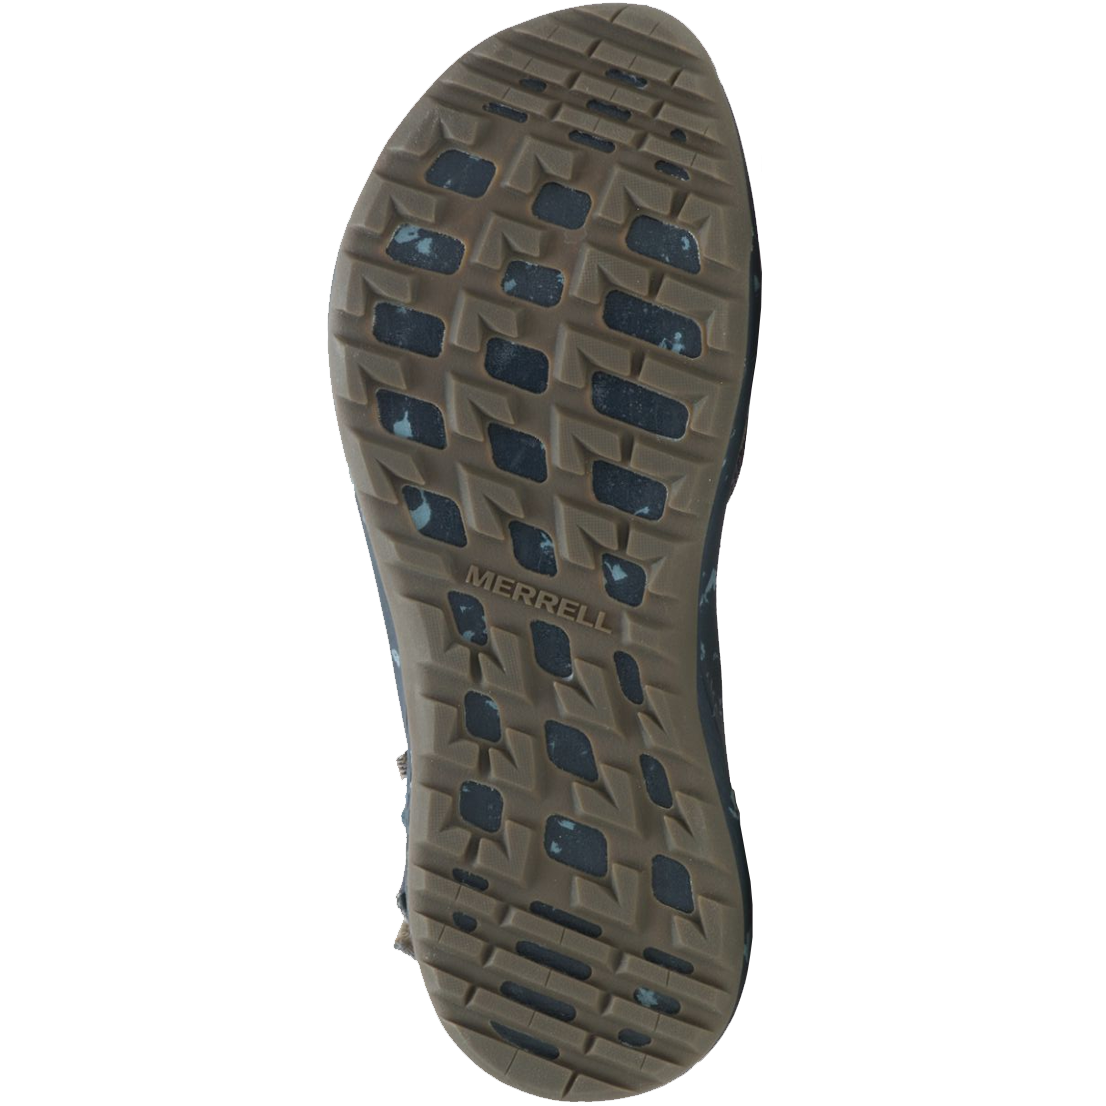 Merrell® Women's Bravada Cord Wrap Sandal